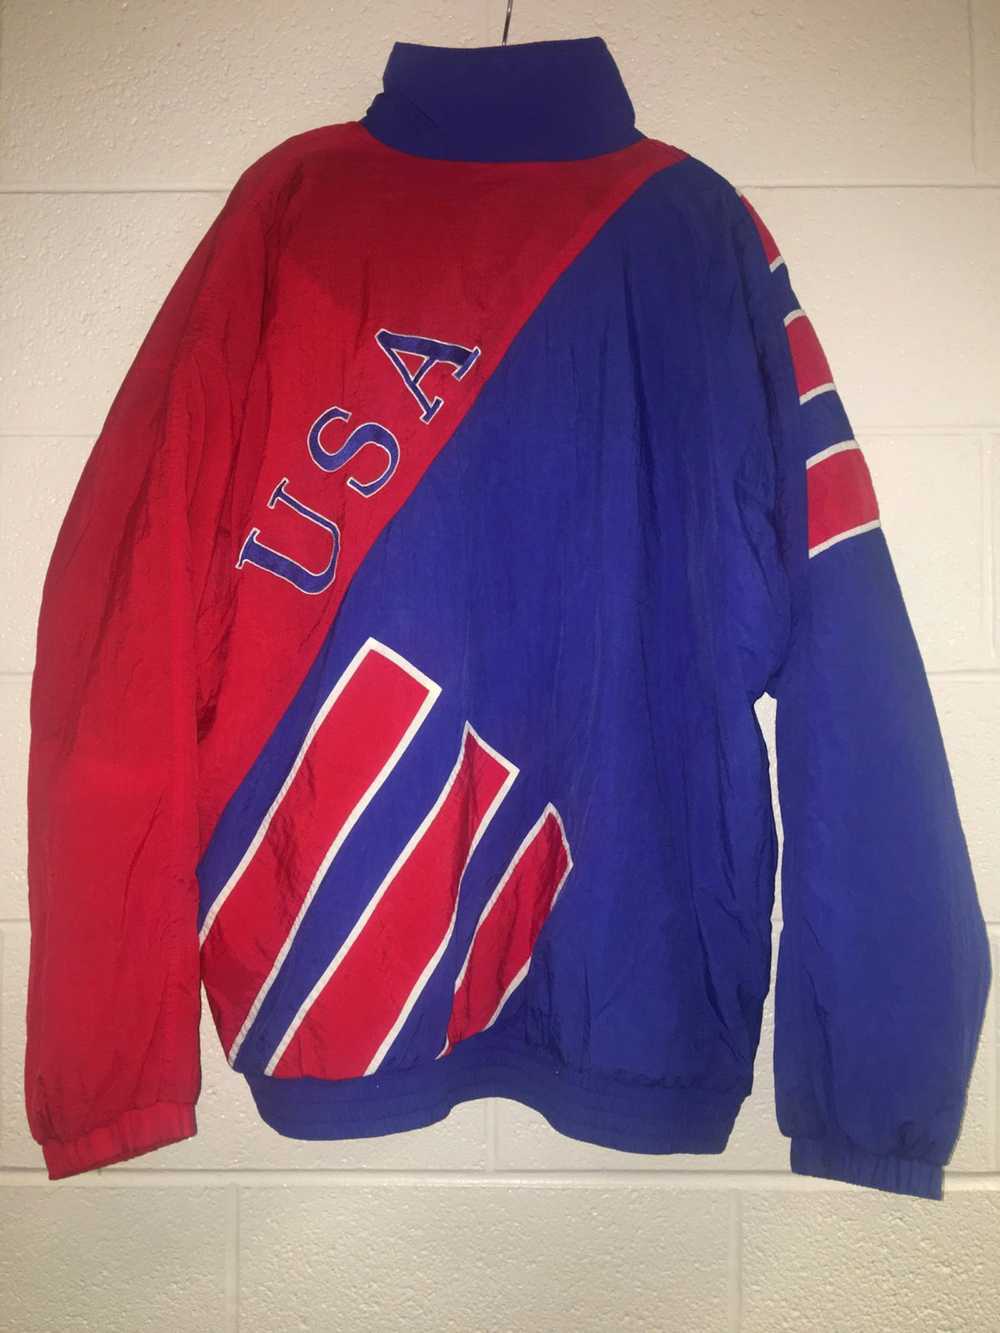 Adidas Vintage Adidas USA Olympic Jacket - image 2